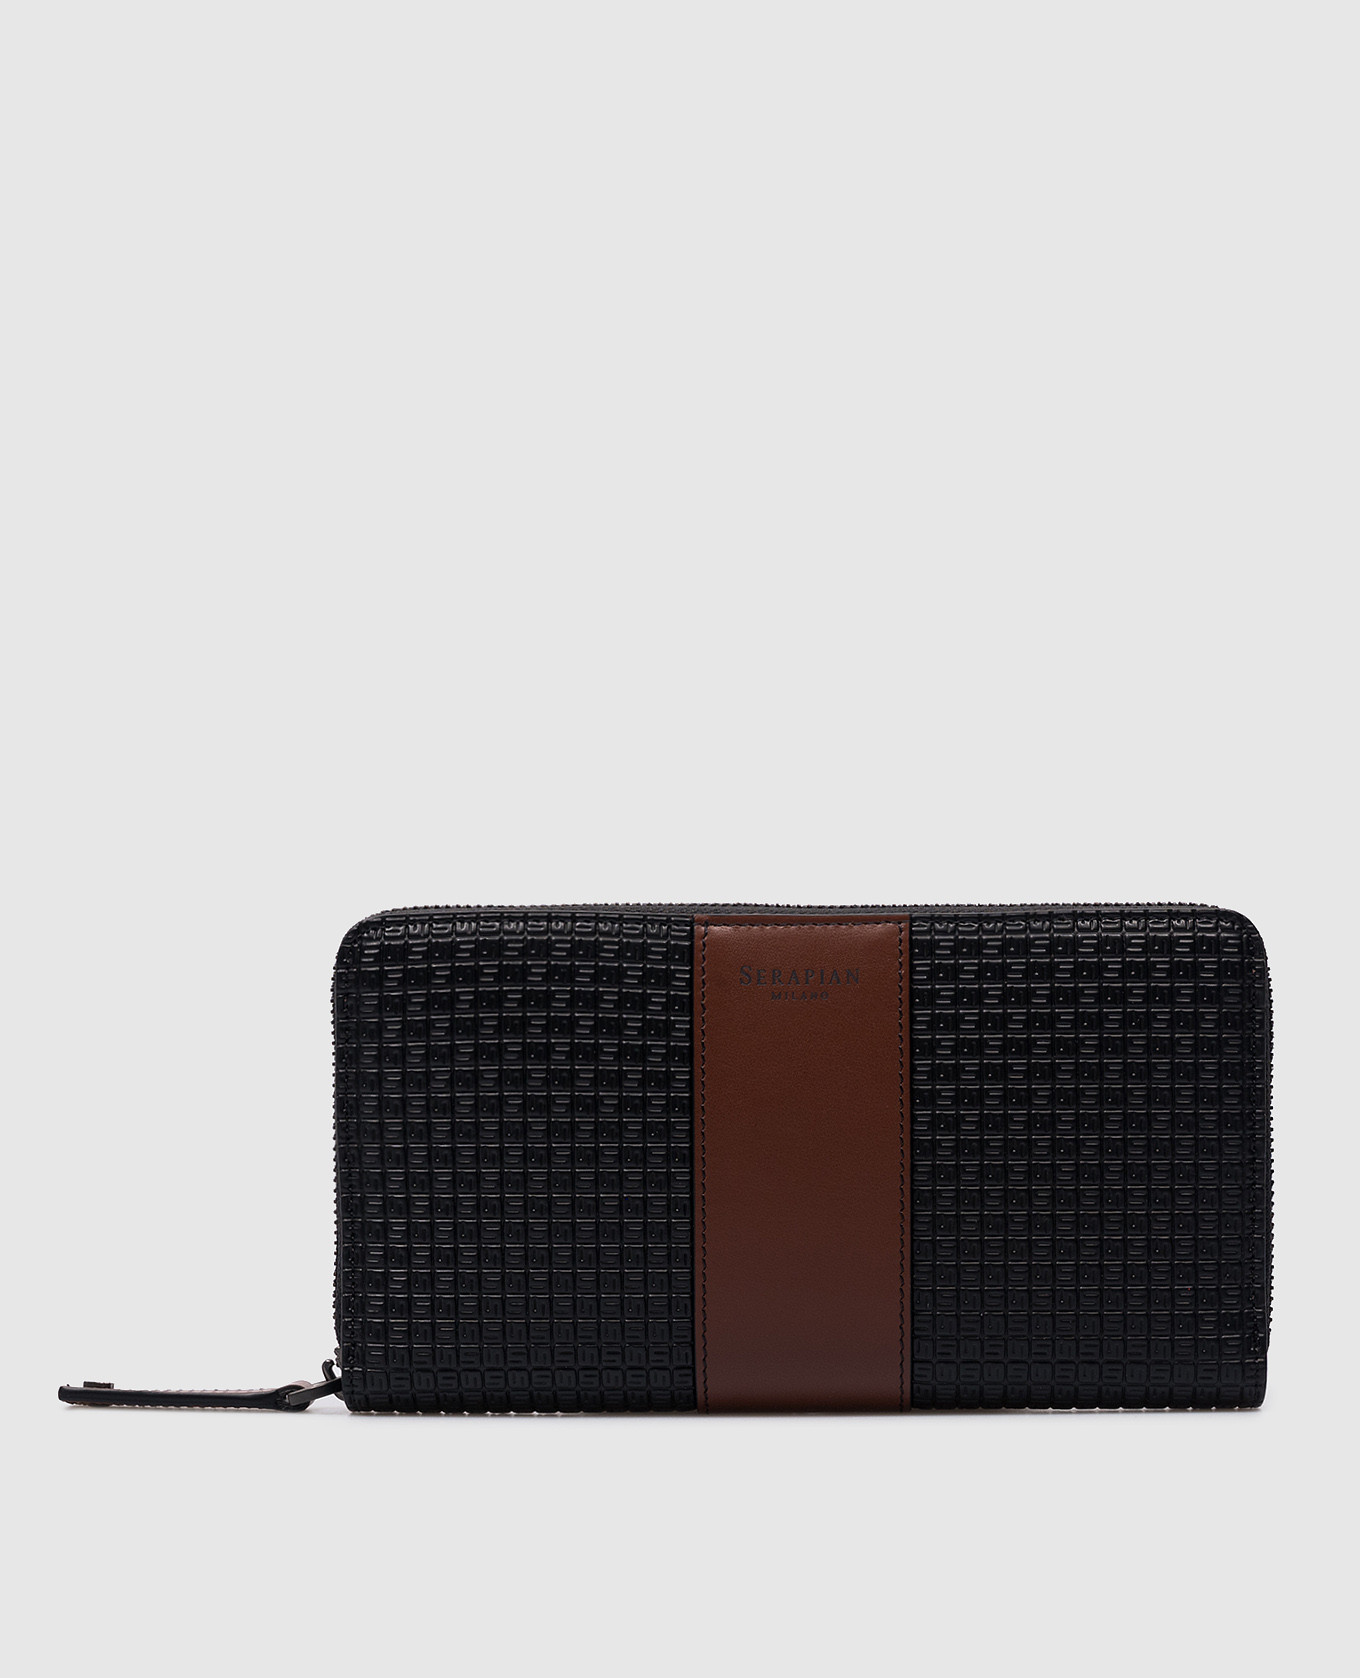 Stepan 72 black leather wallet